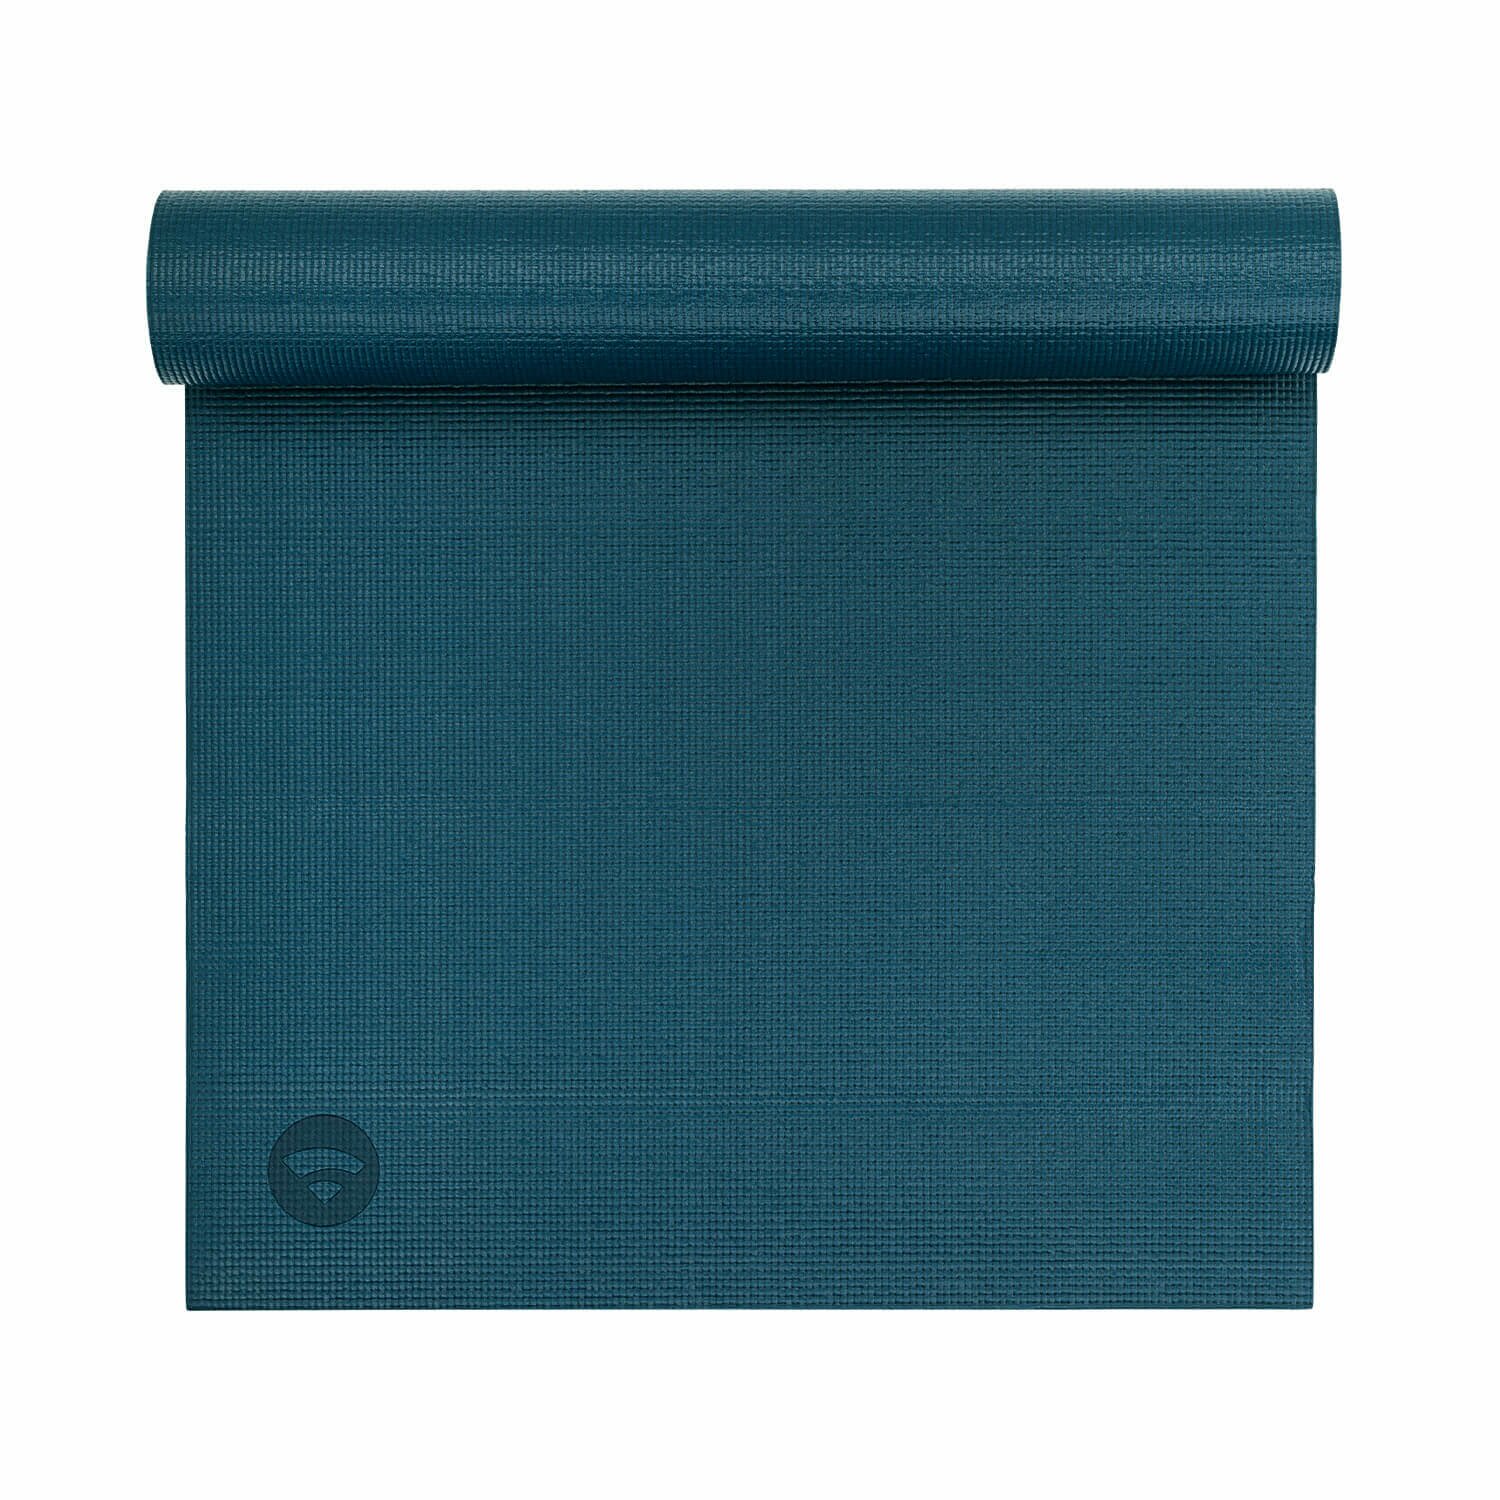 Tapete de yoga Asana - 4.5mm PVC ecológico 9